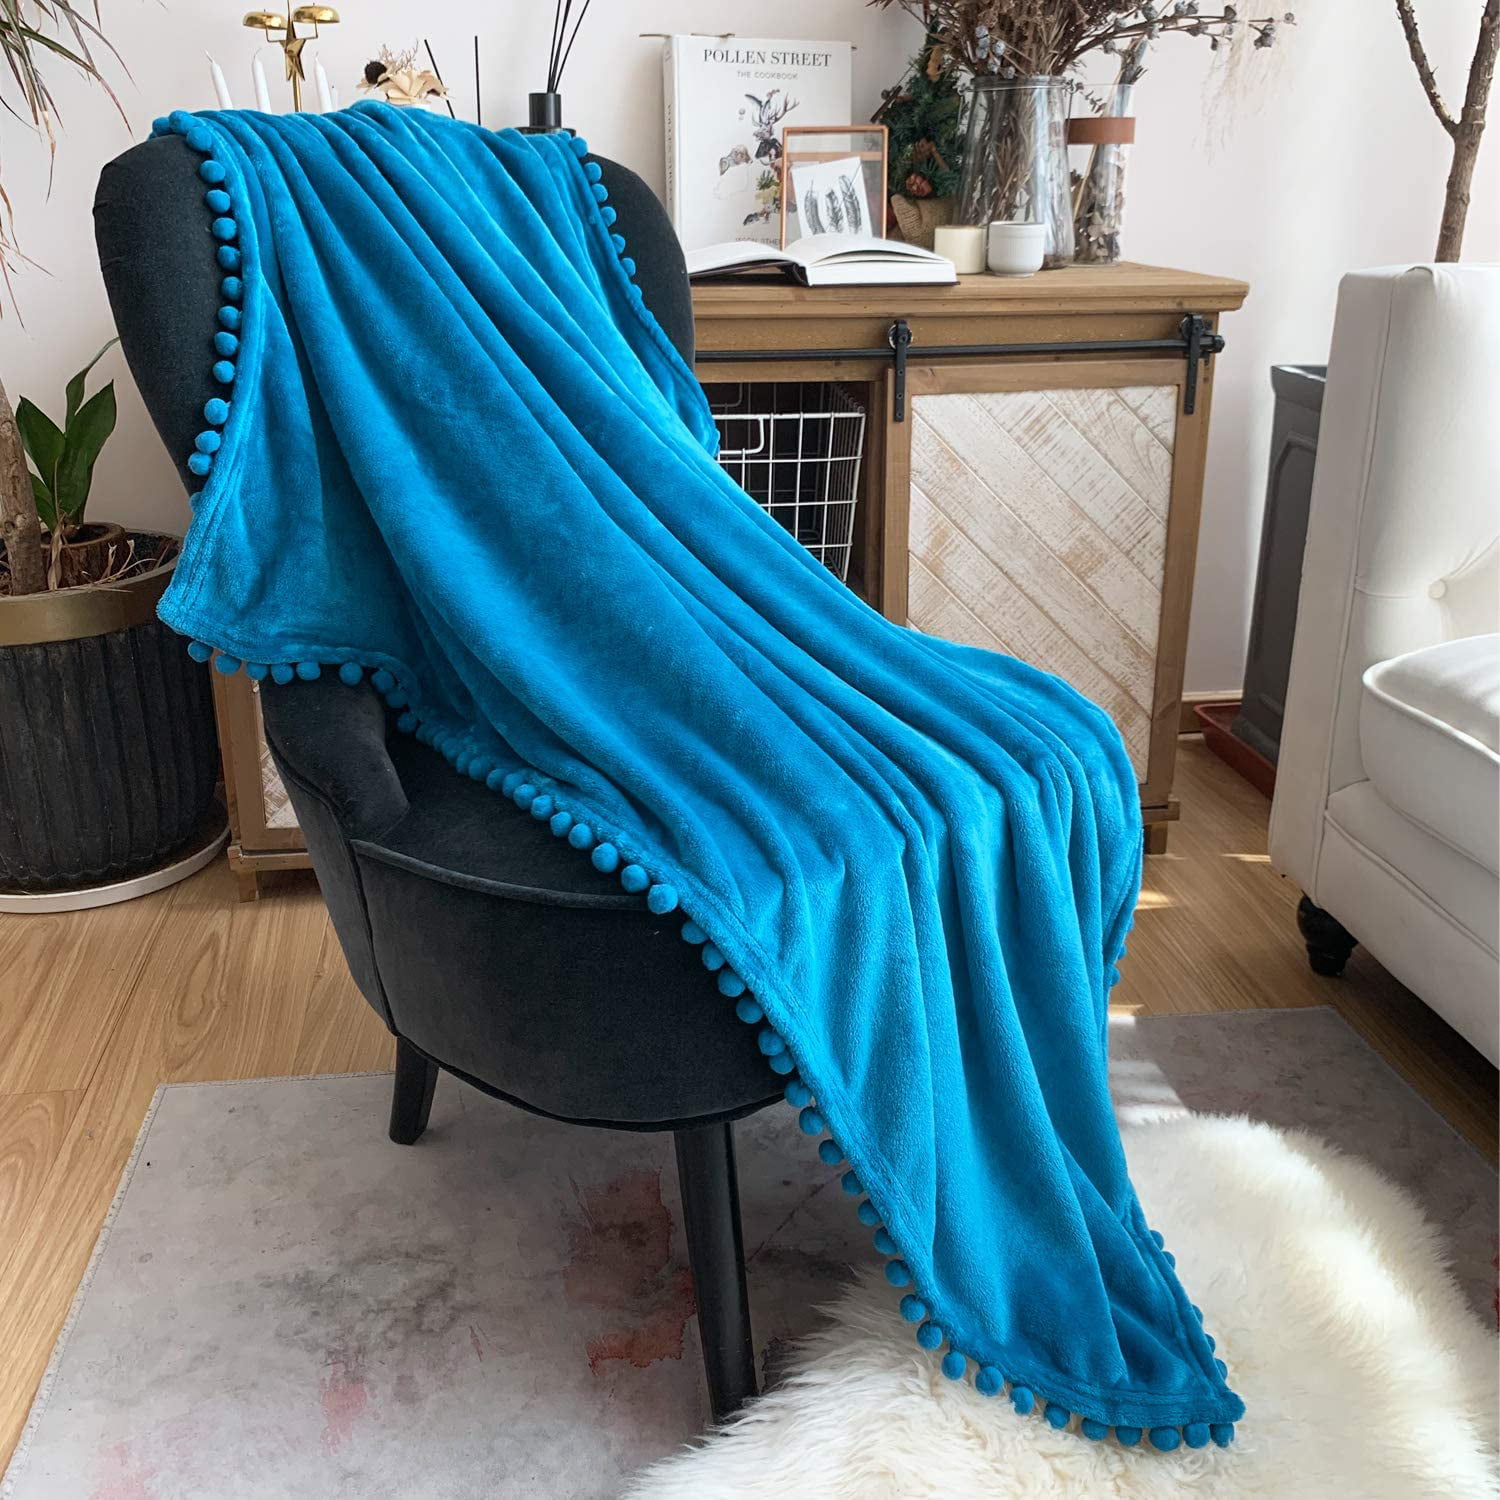 Details about   Blanket winter Throw Soft Sofa Bed body Fleece warm receiving Plaid Checks sheet 